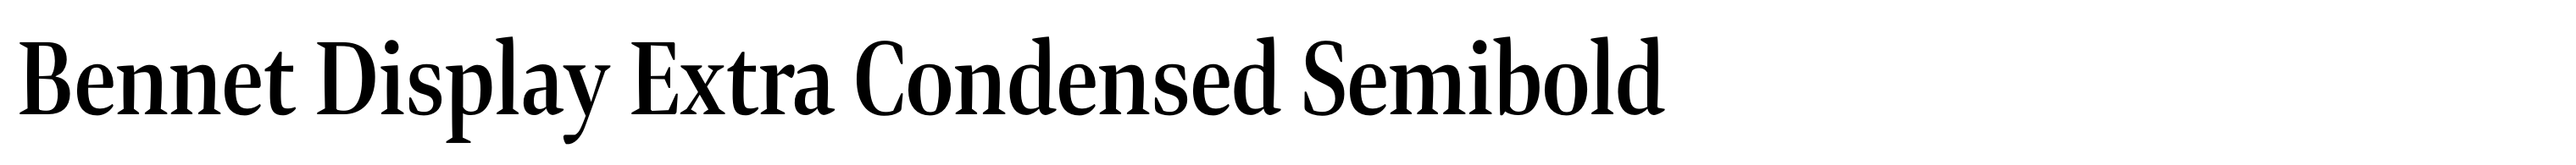 Bennet Display Extra Condensed Semibold